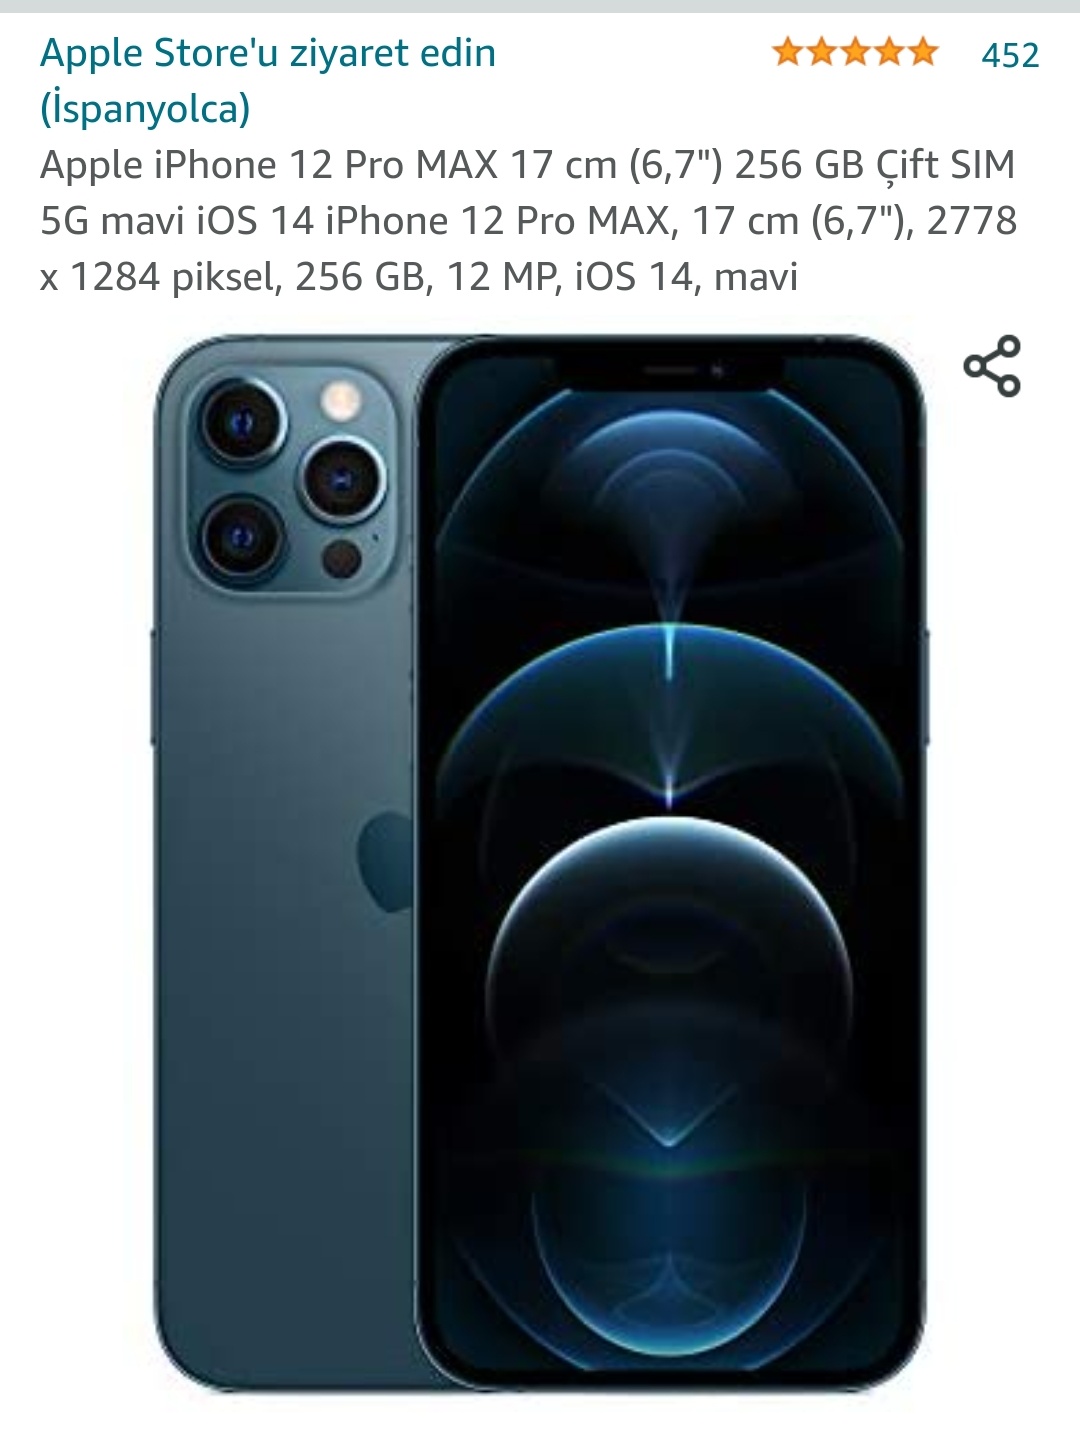 Iphone 12 pro max 256 gb Amazon | DonanımHaber Forum